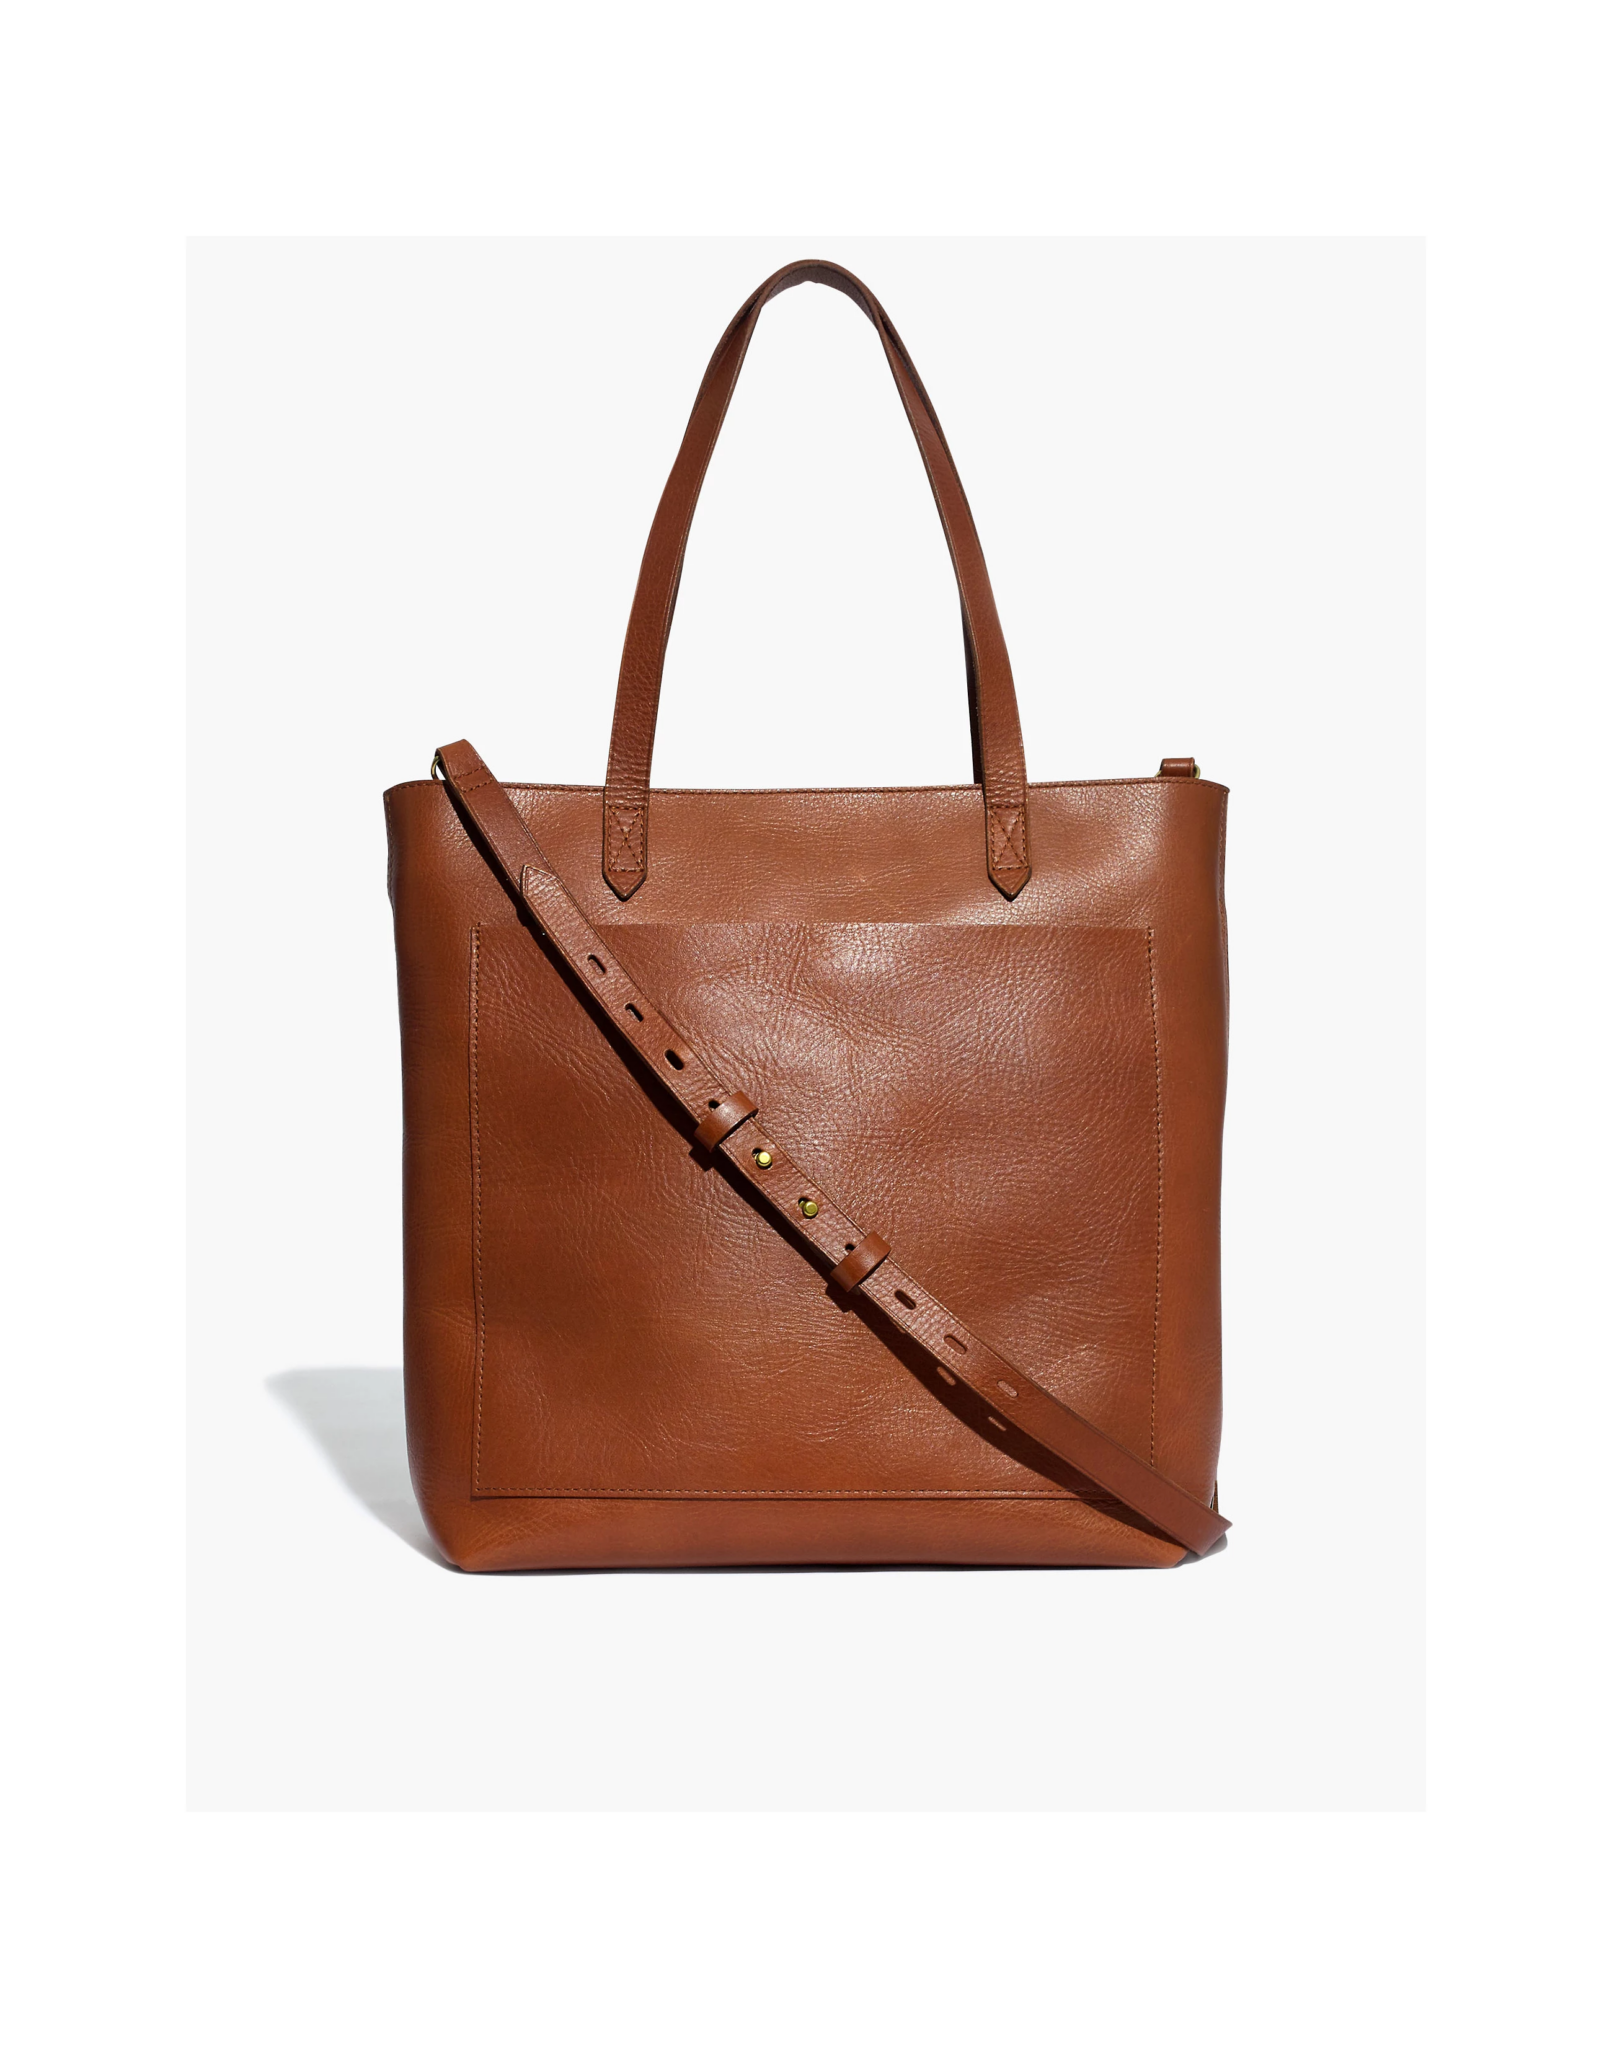 20 Best Designer Crossbody Bags - Paisley & Sparrow